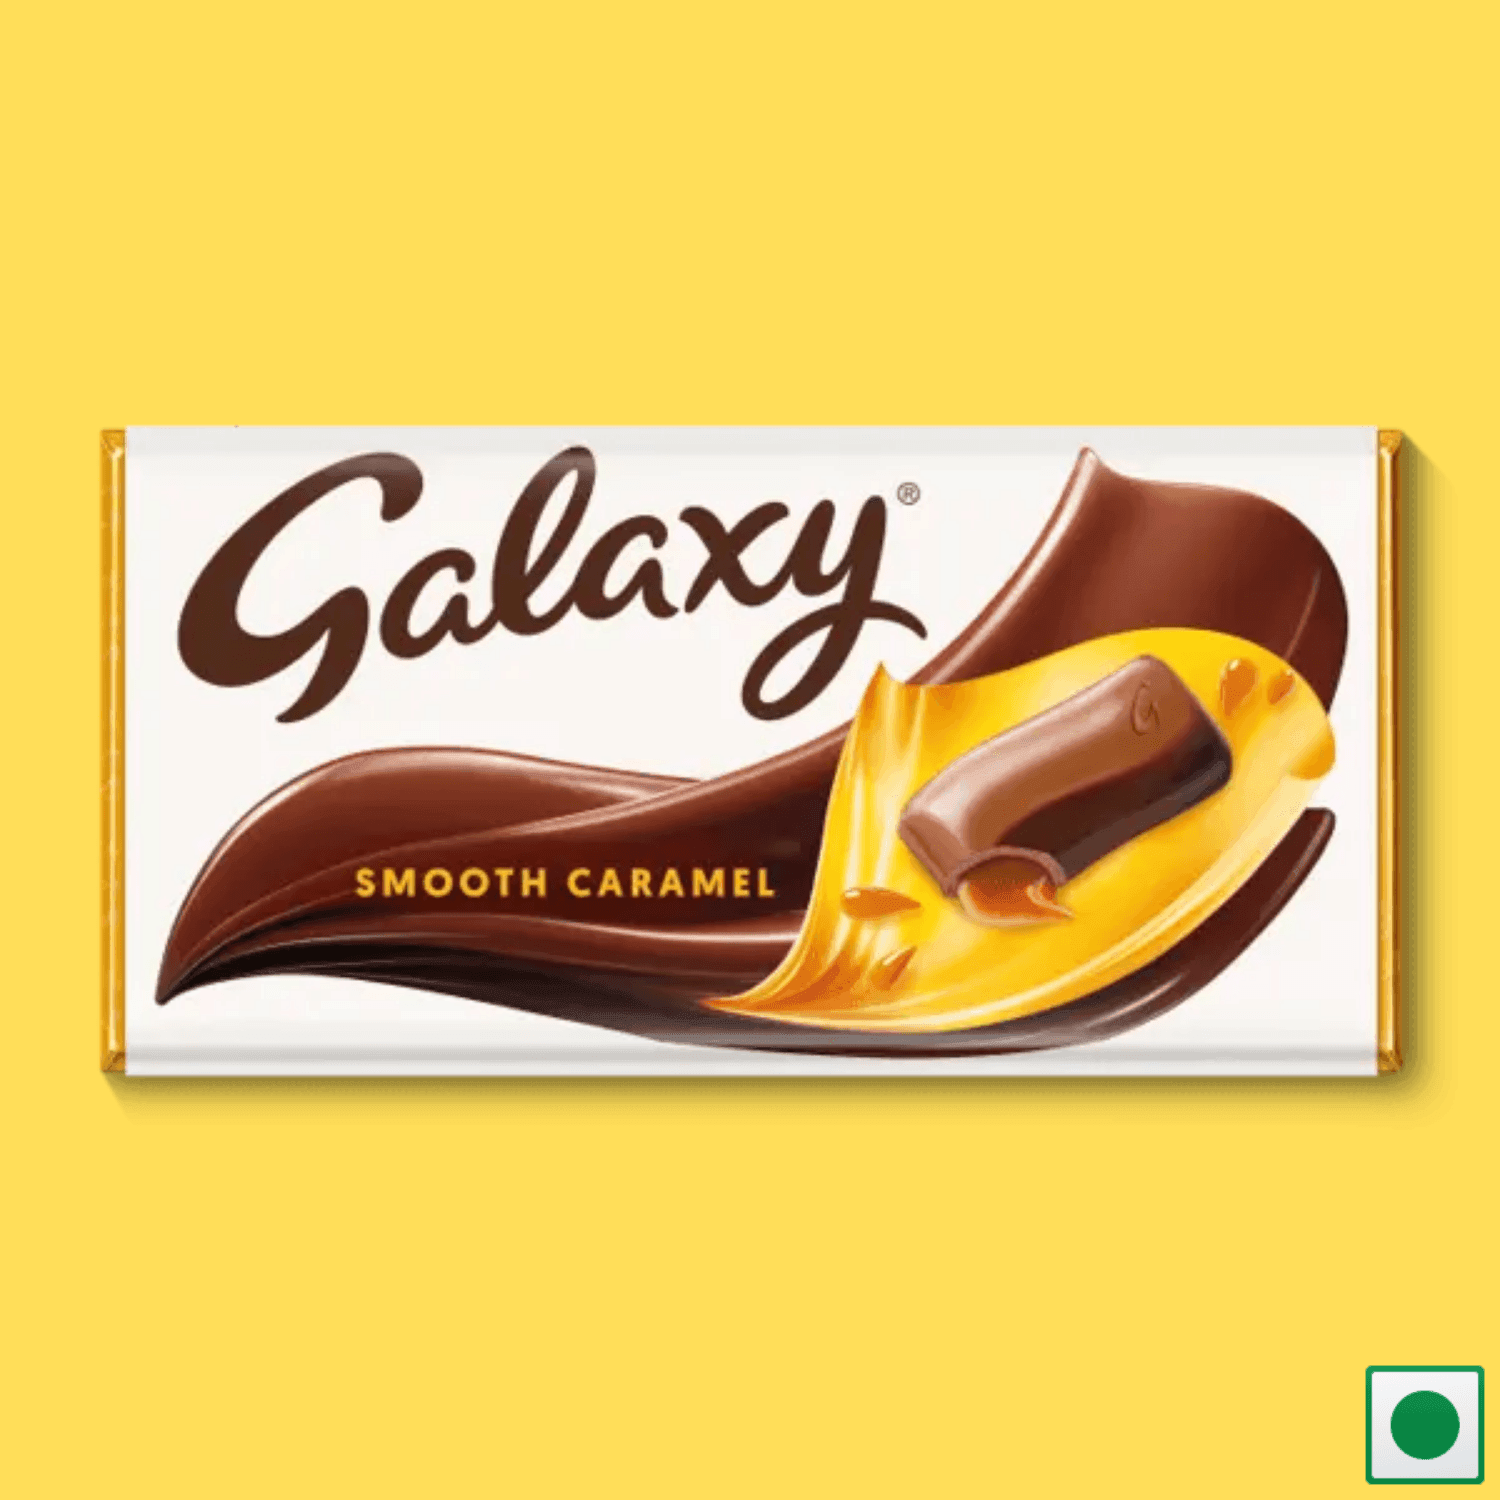 Galaxy® Smooth Caramel, 135g (Imported) - Super 7 Mart